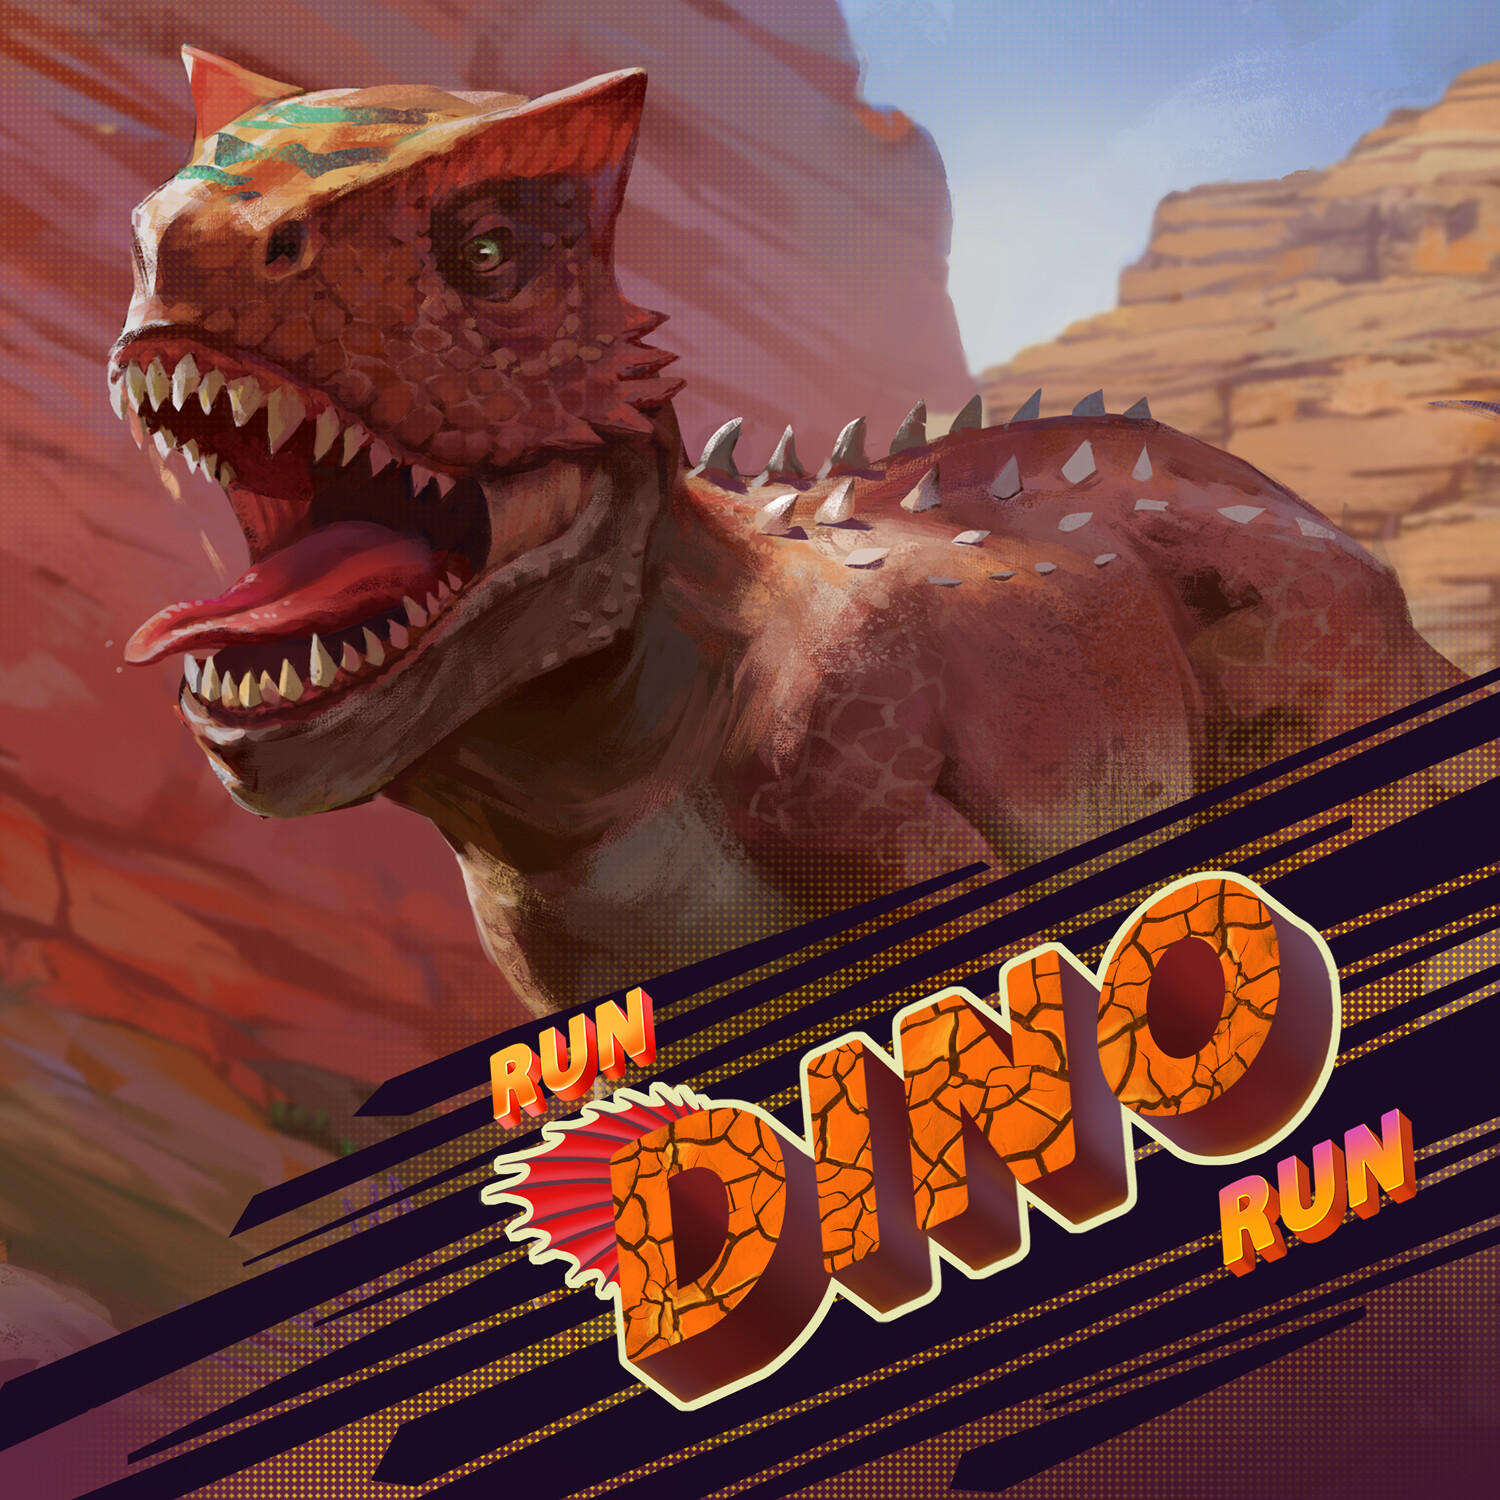 Dino Run DX - Dino Run Art Contest! (Ends Monday Feb 19th) - Steam News